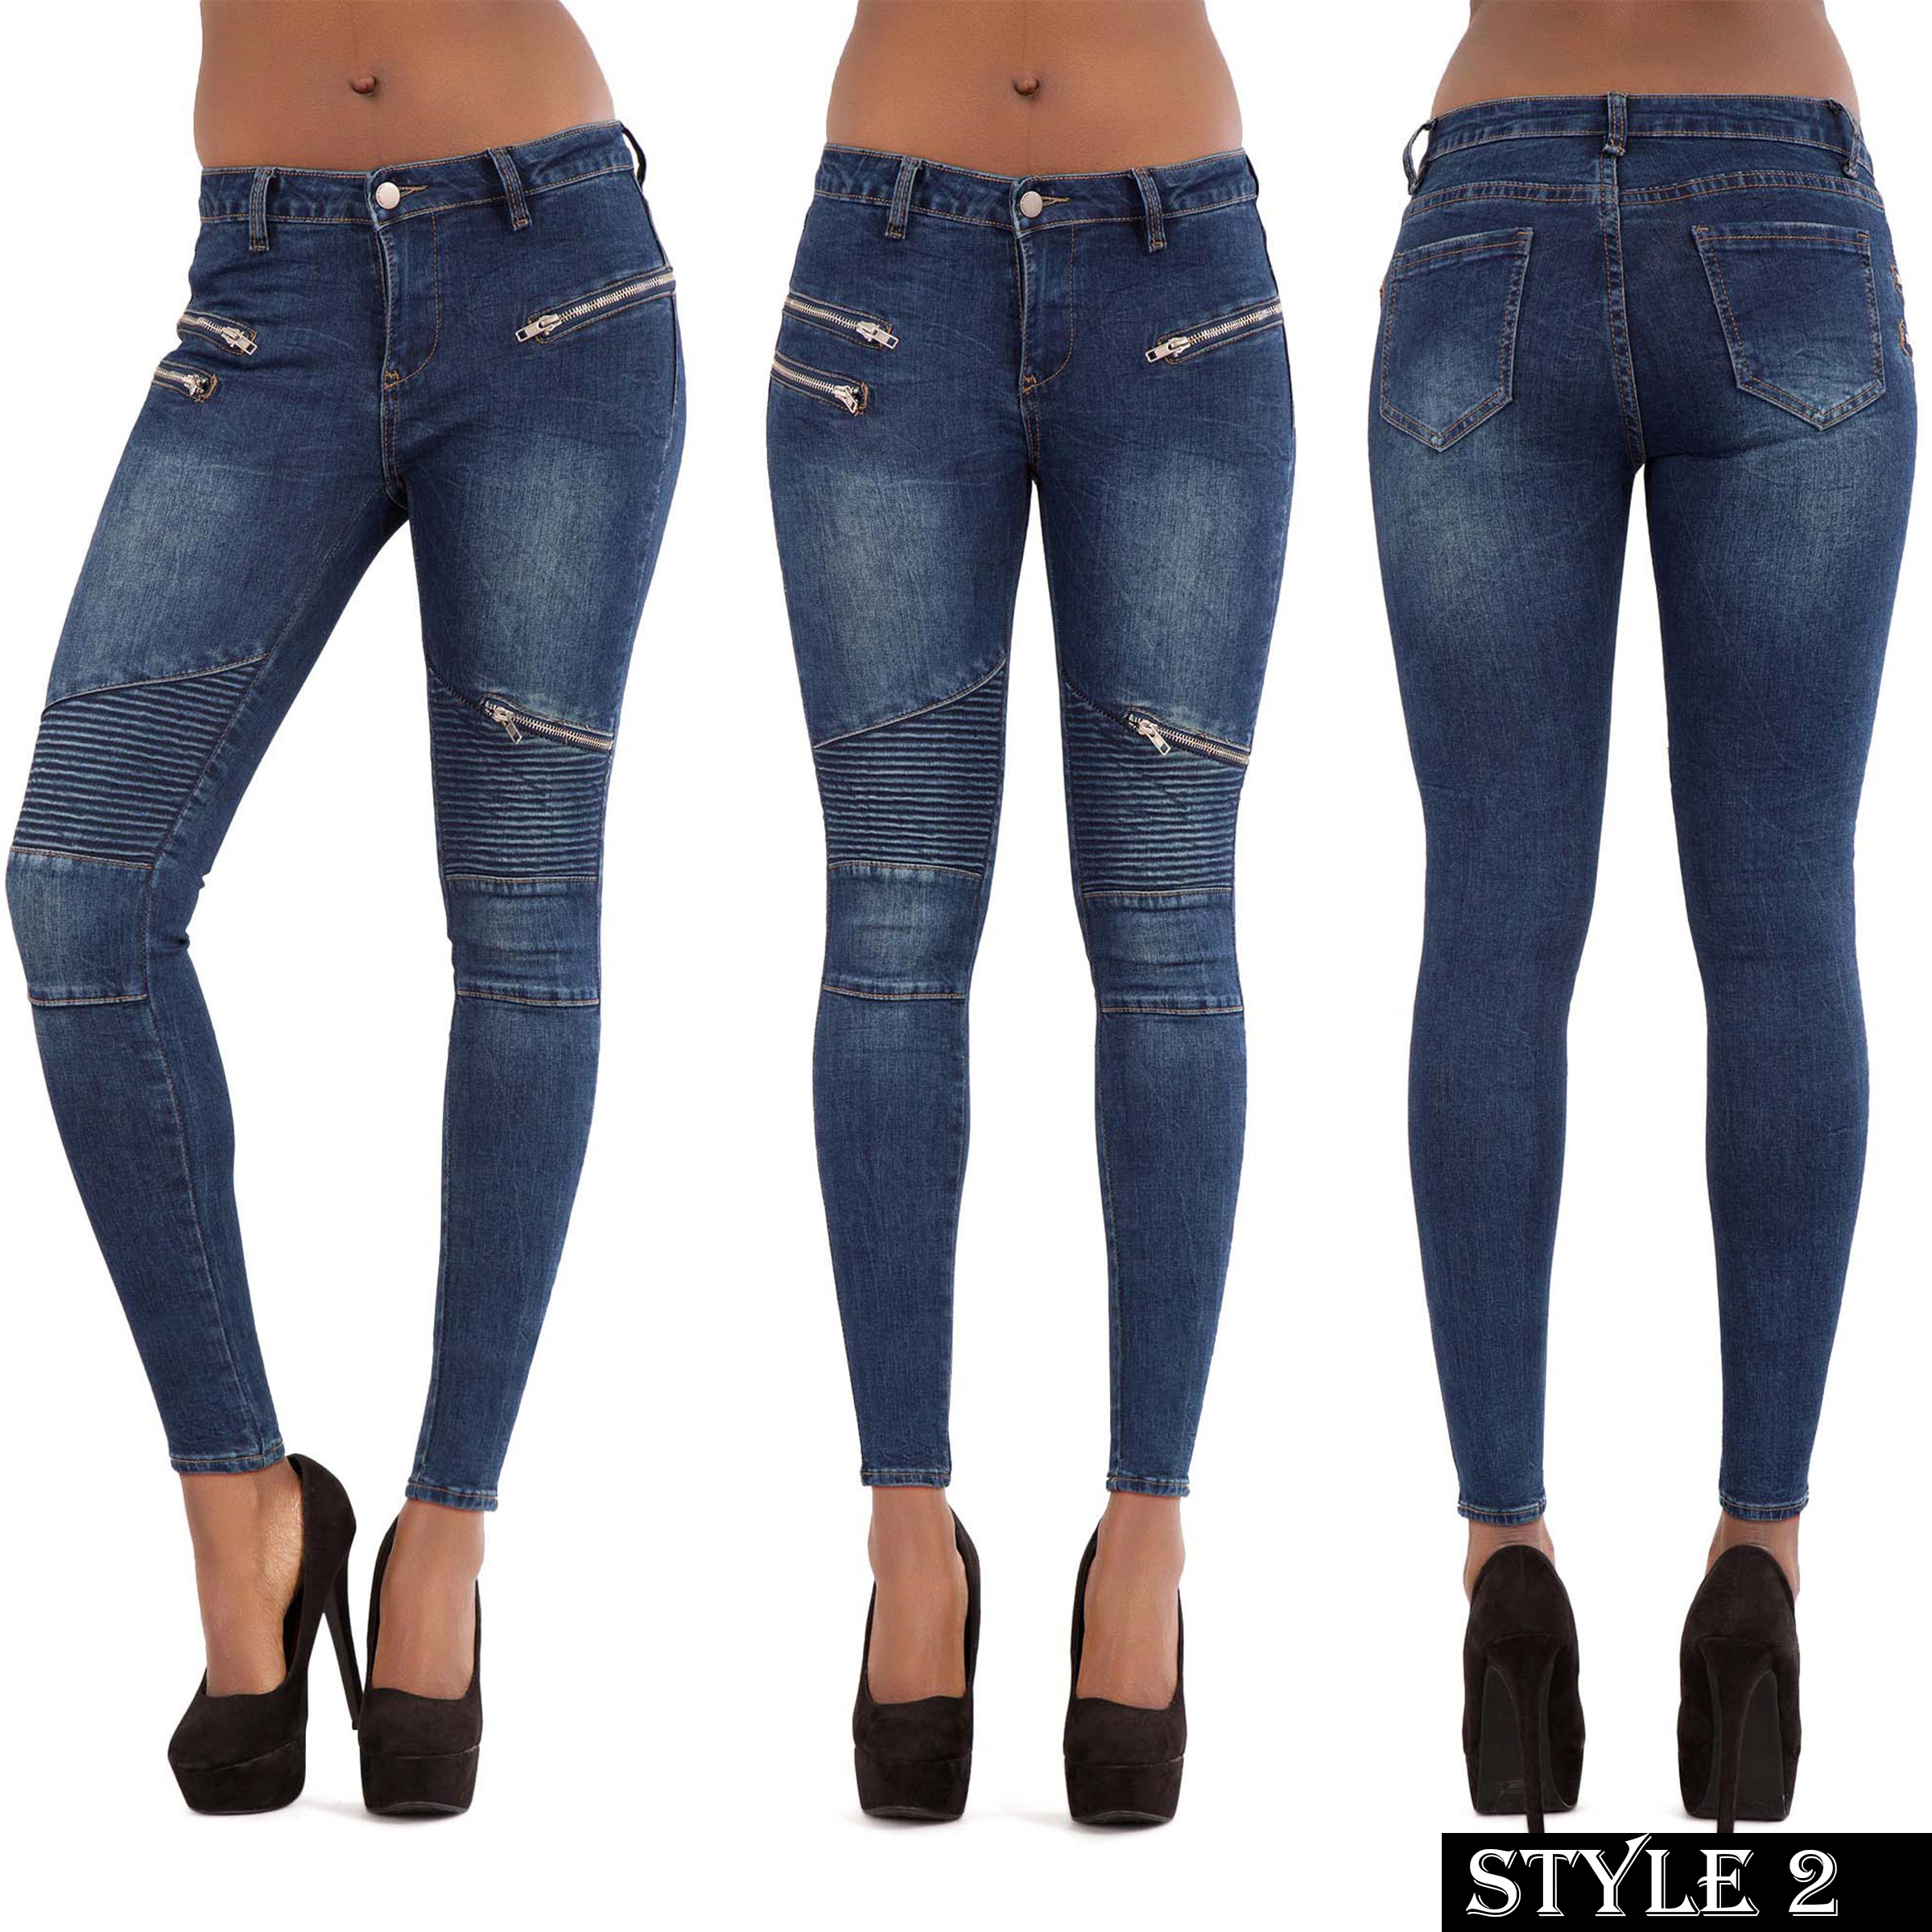 New Sexy Women Celeb Style Biker Look Stretchy Jeans Pants Size 6 8 10 12 14 16 Ebay